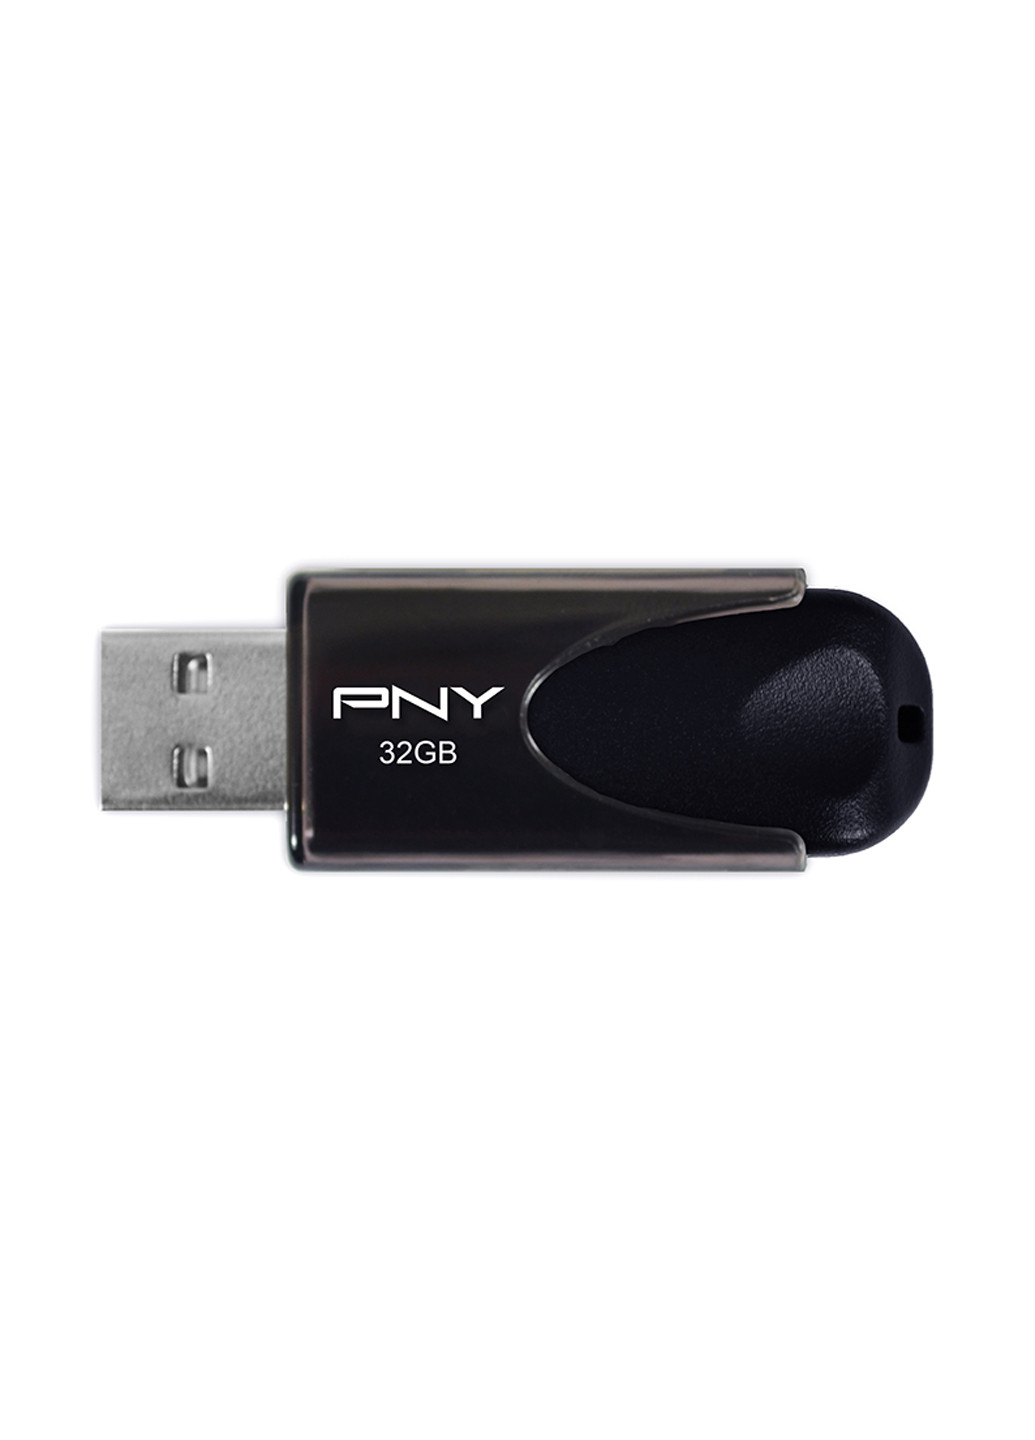 Флеш память USB Attache 4 32GB Black (FD32GATT4-EF) PNY флеш память usb pny attache 4 32gb black (fd32gatt4-ef) (135527001)